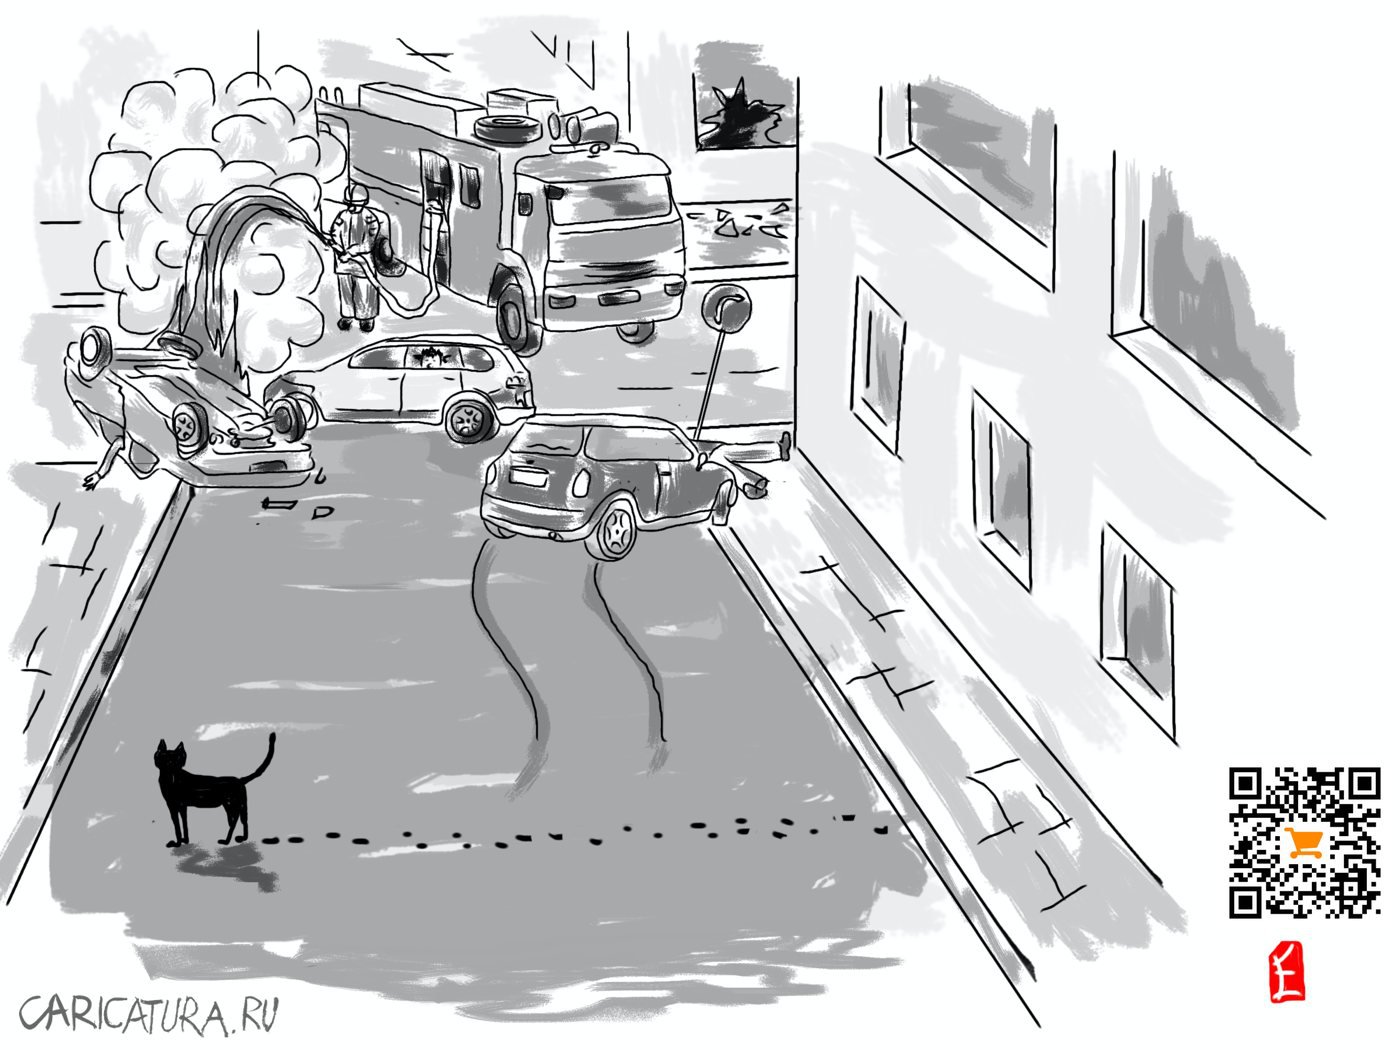 Карикатура "Пятница 13", Евгений Лапин